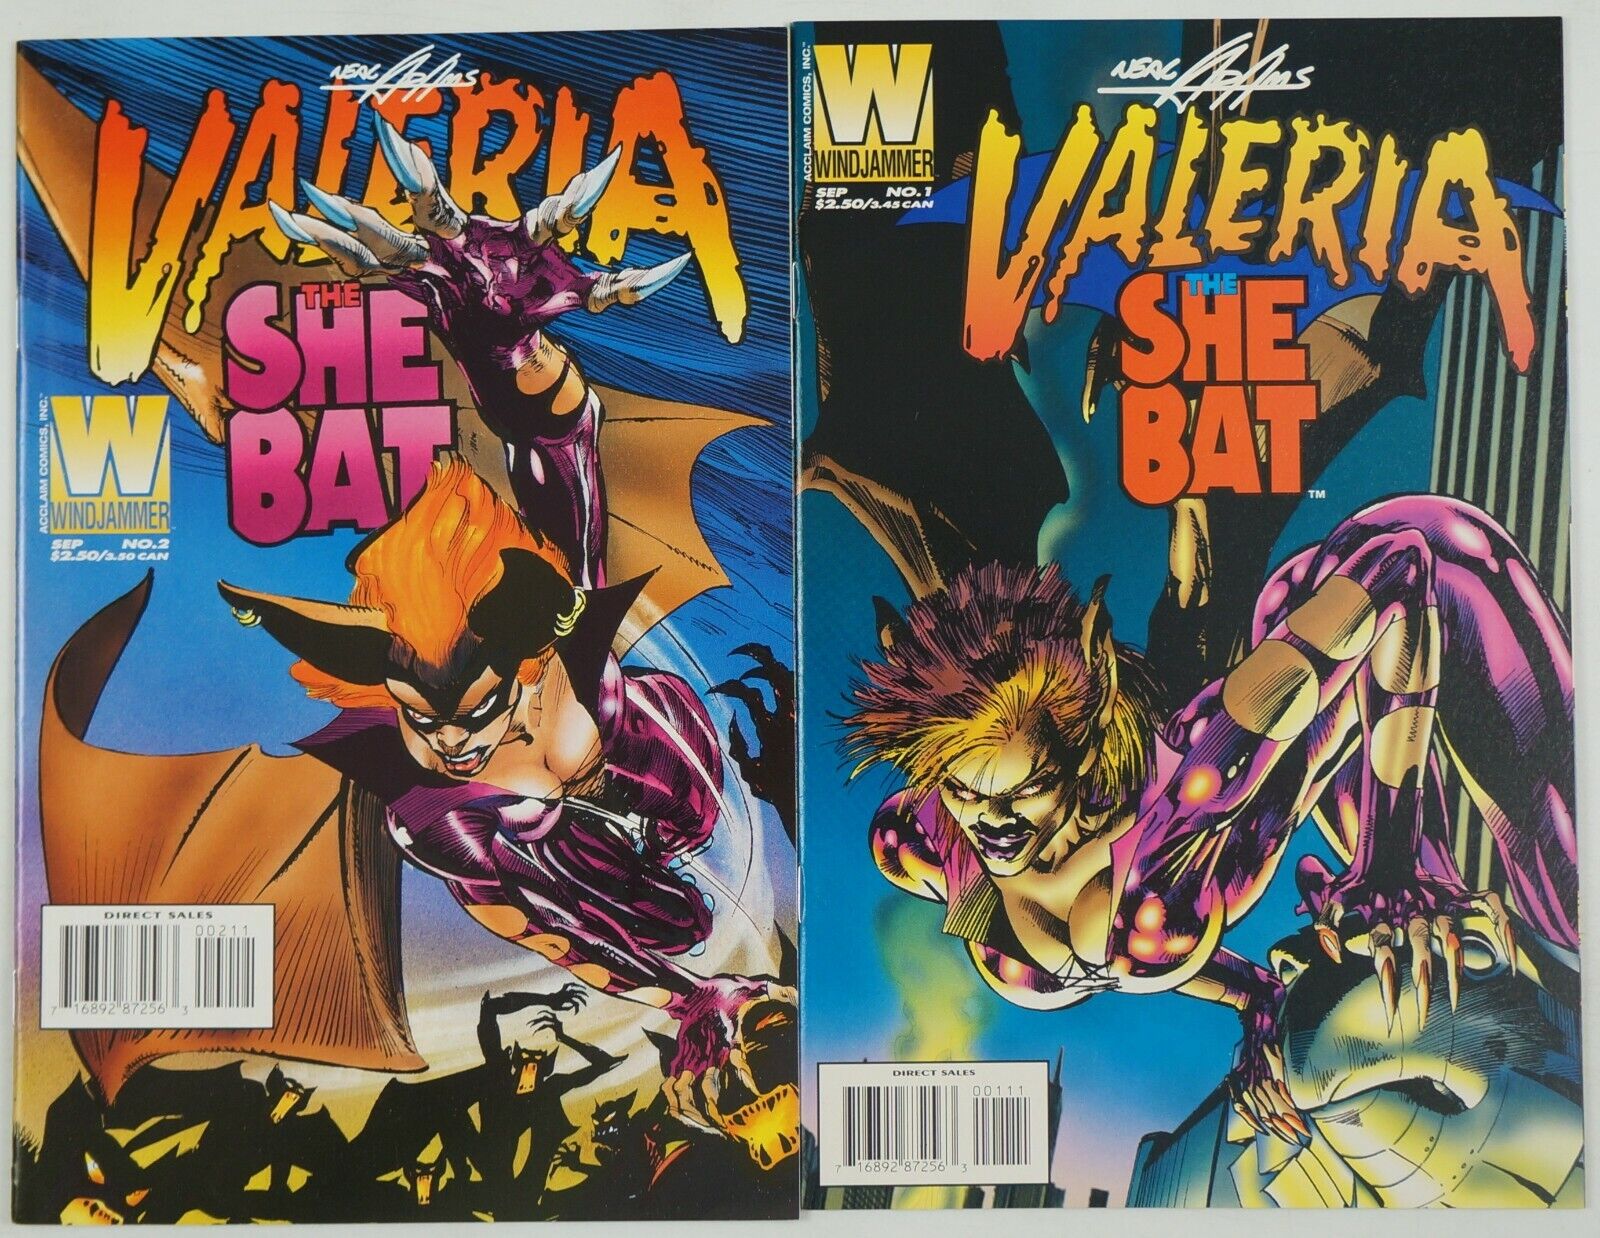 Valeria the She-Bat #1-2 VF/NM complete series - Neal Adams - Windjammer